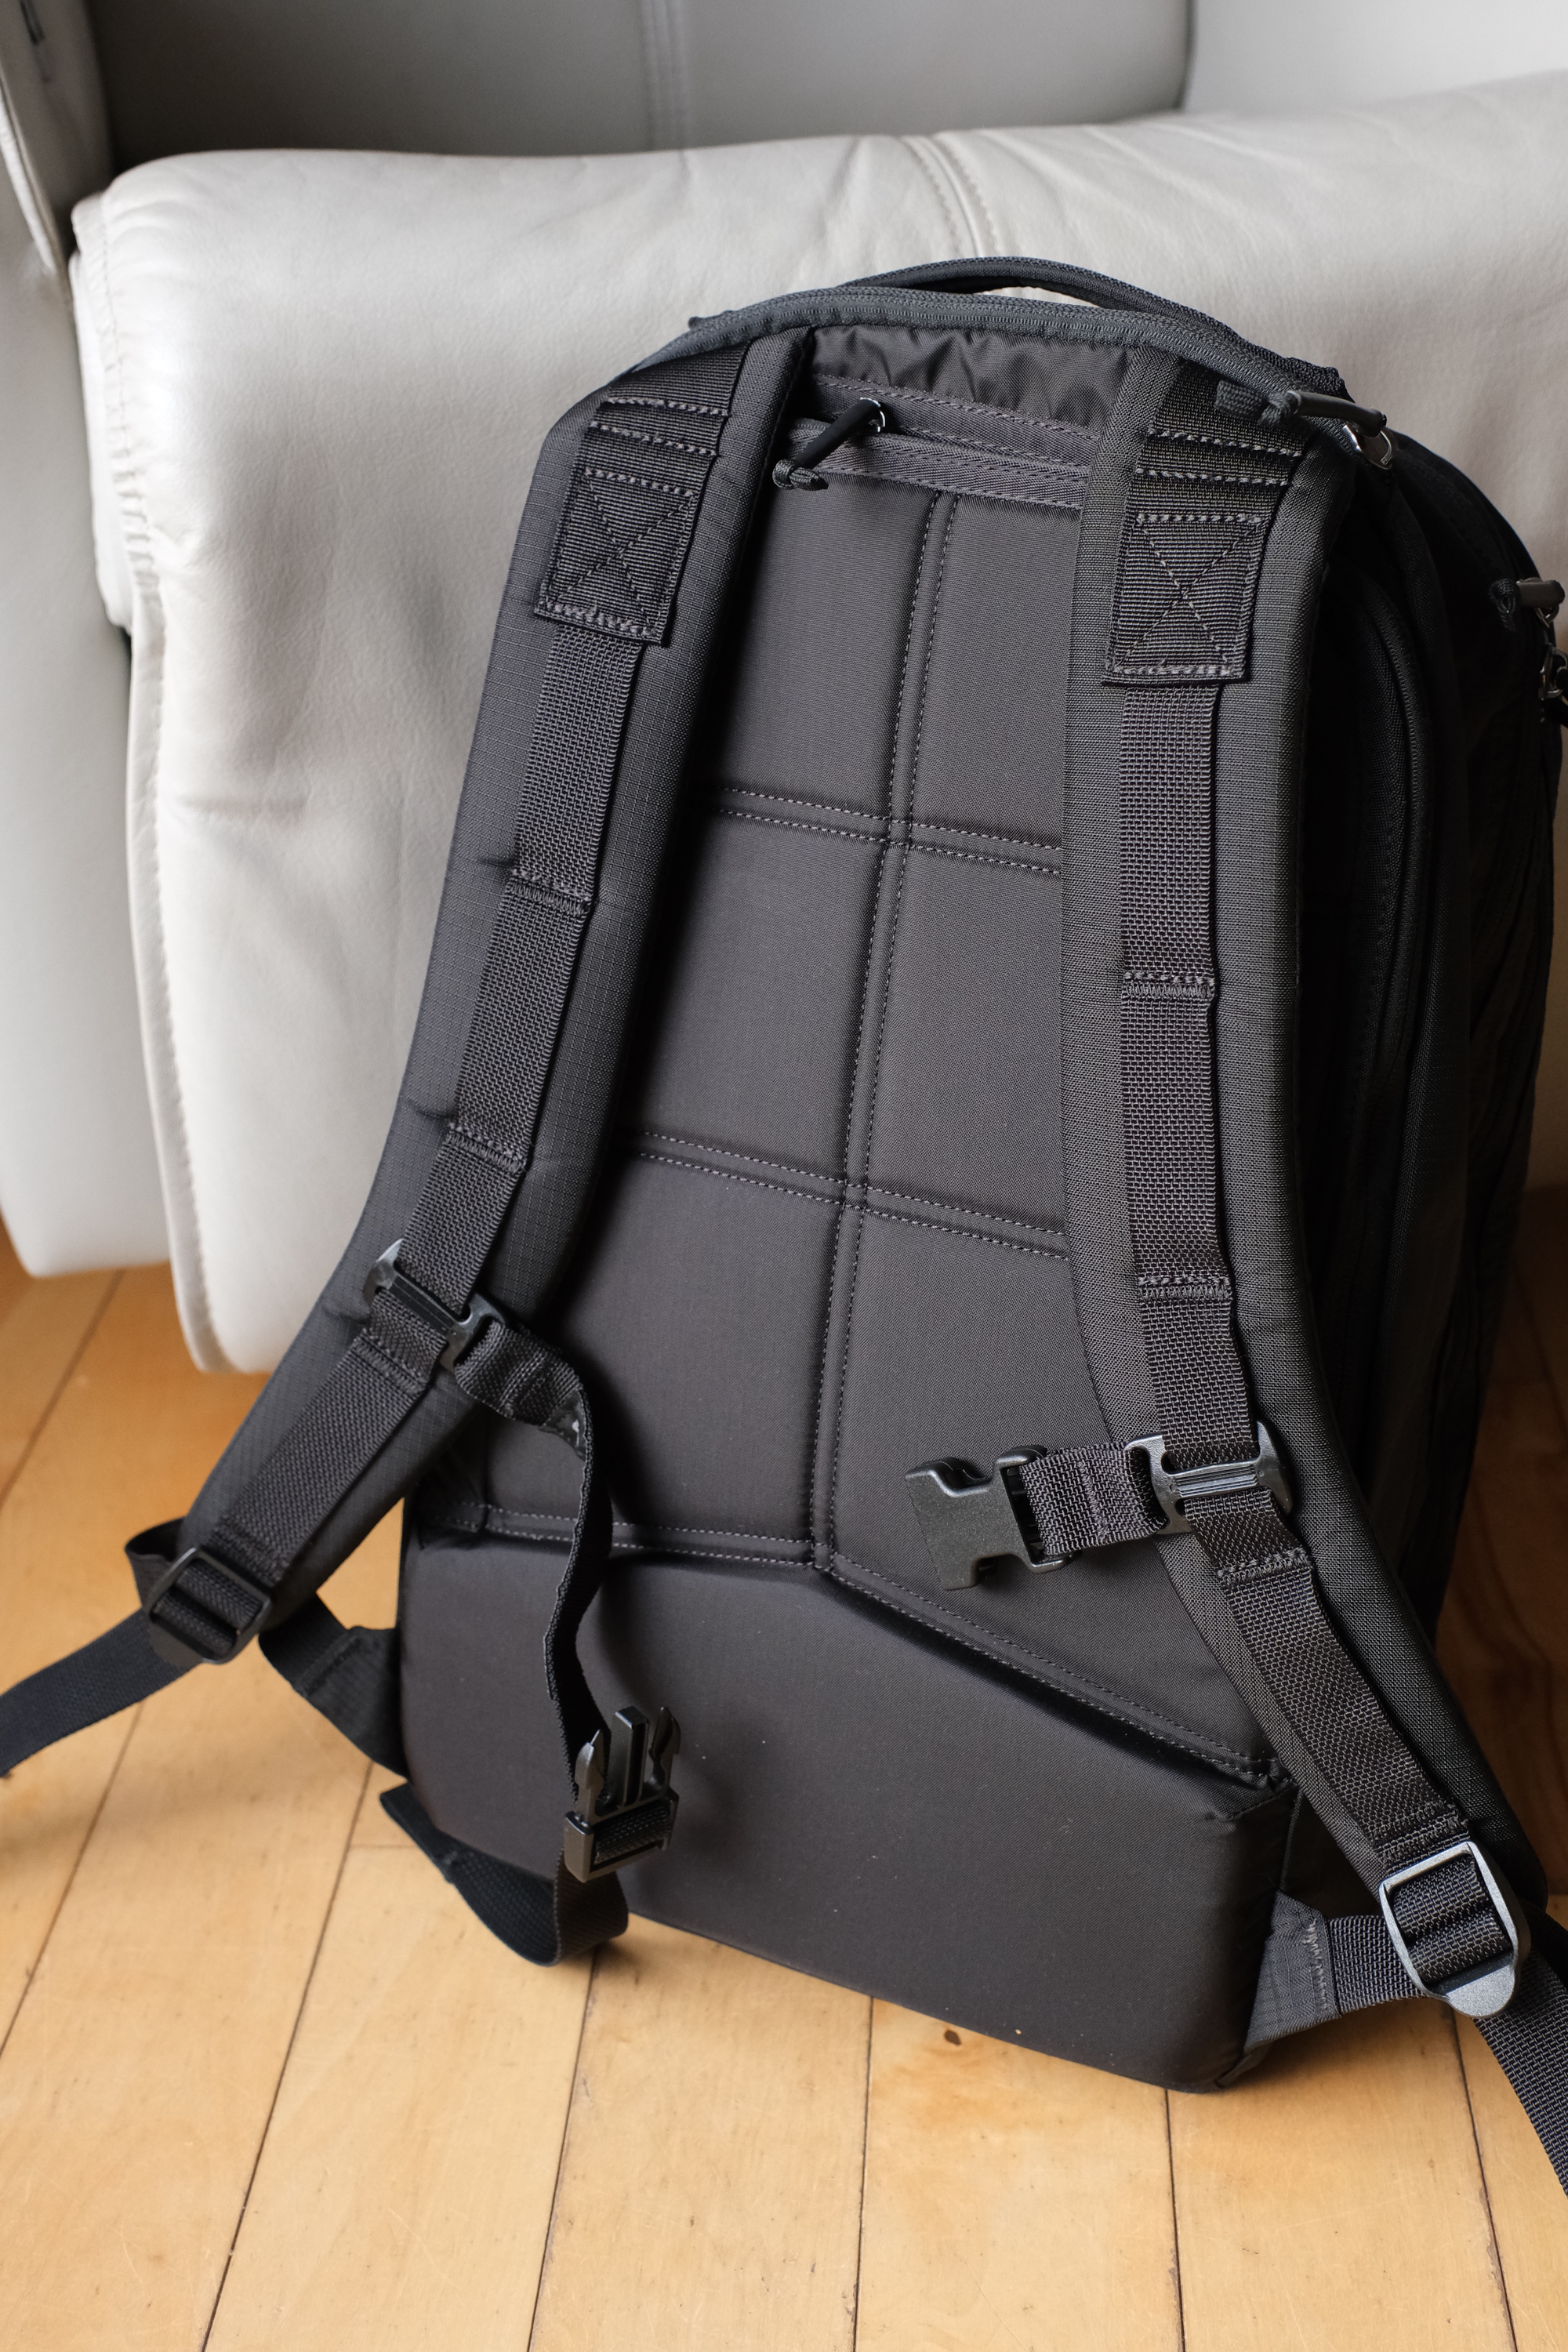 Goruck GR1 21L Long-Term Review | Still one of the best EDC Backpacks? -  YouTube